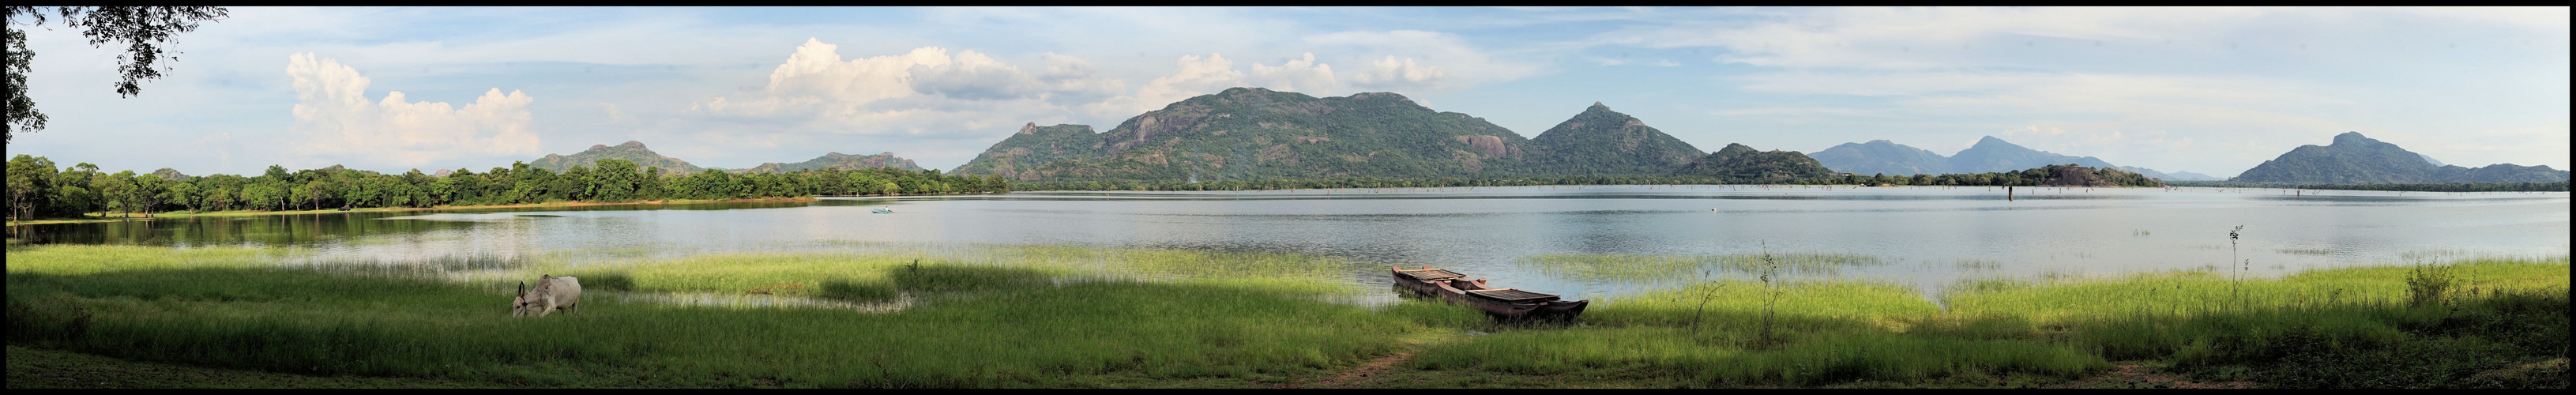 Kandalama See   Resort Amaya Lake     Sri Lanka